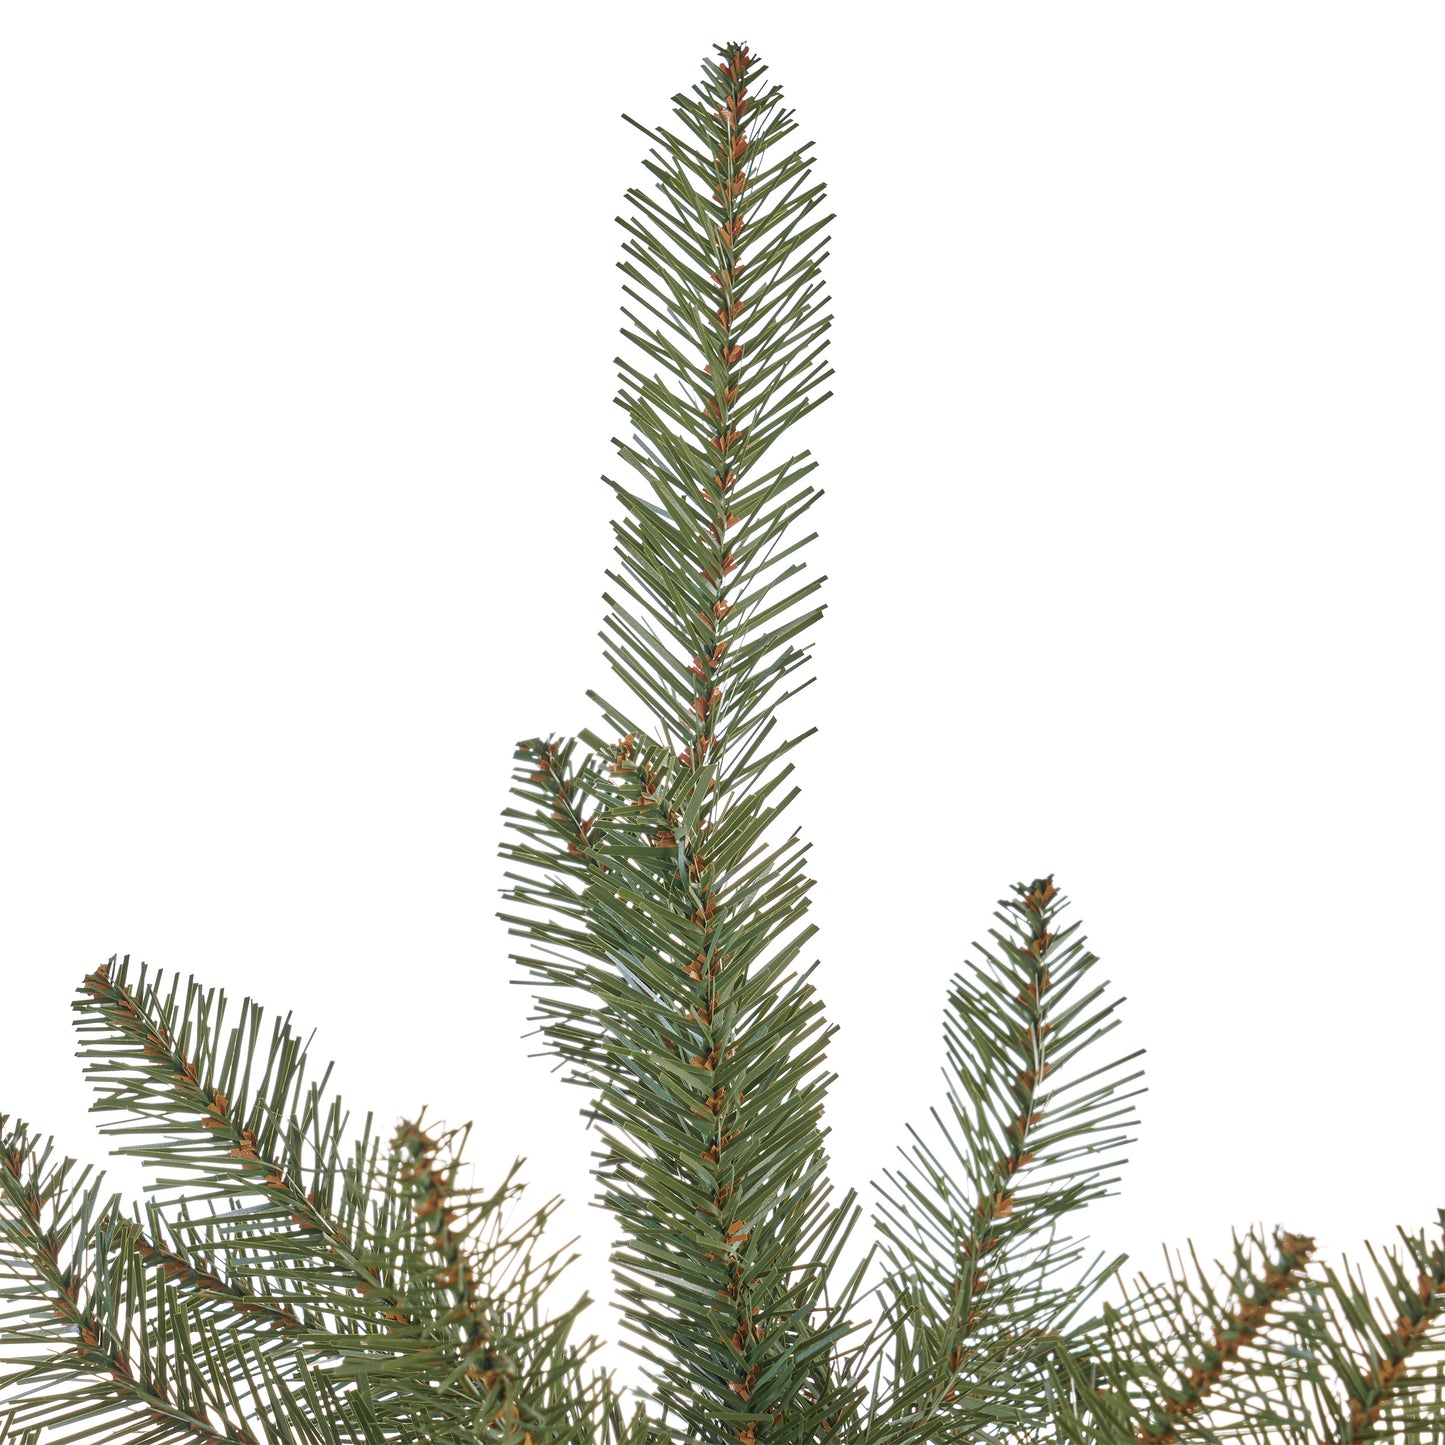 7.5-foot Fraser Fir Hinged Artificial Christmas Tree